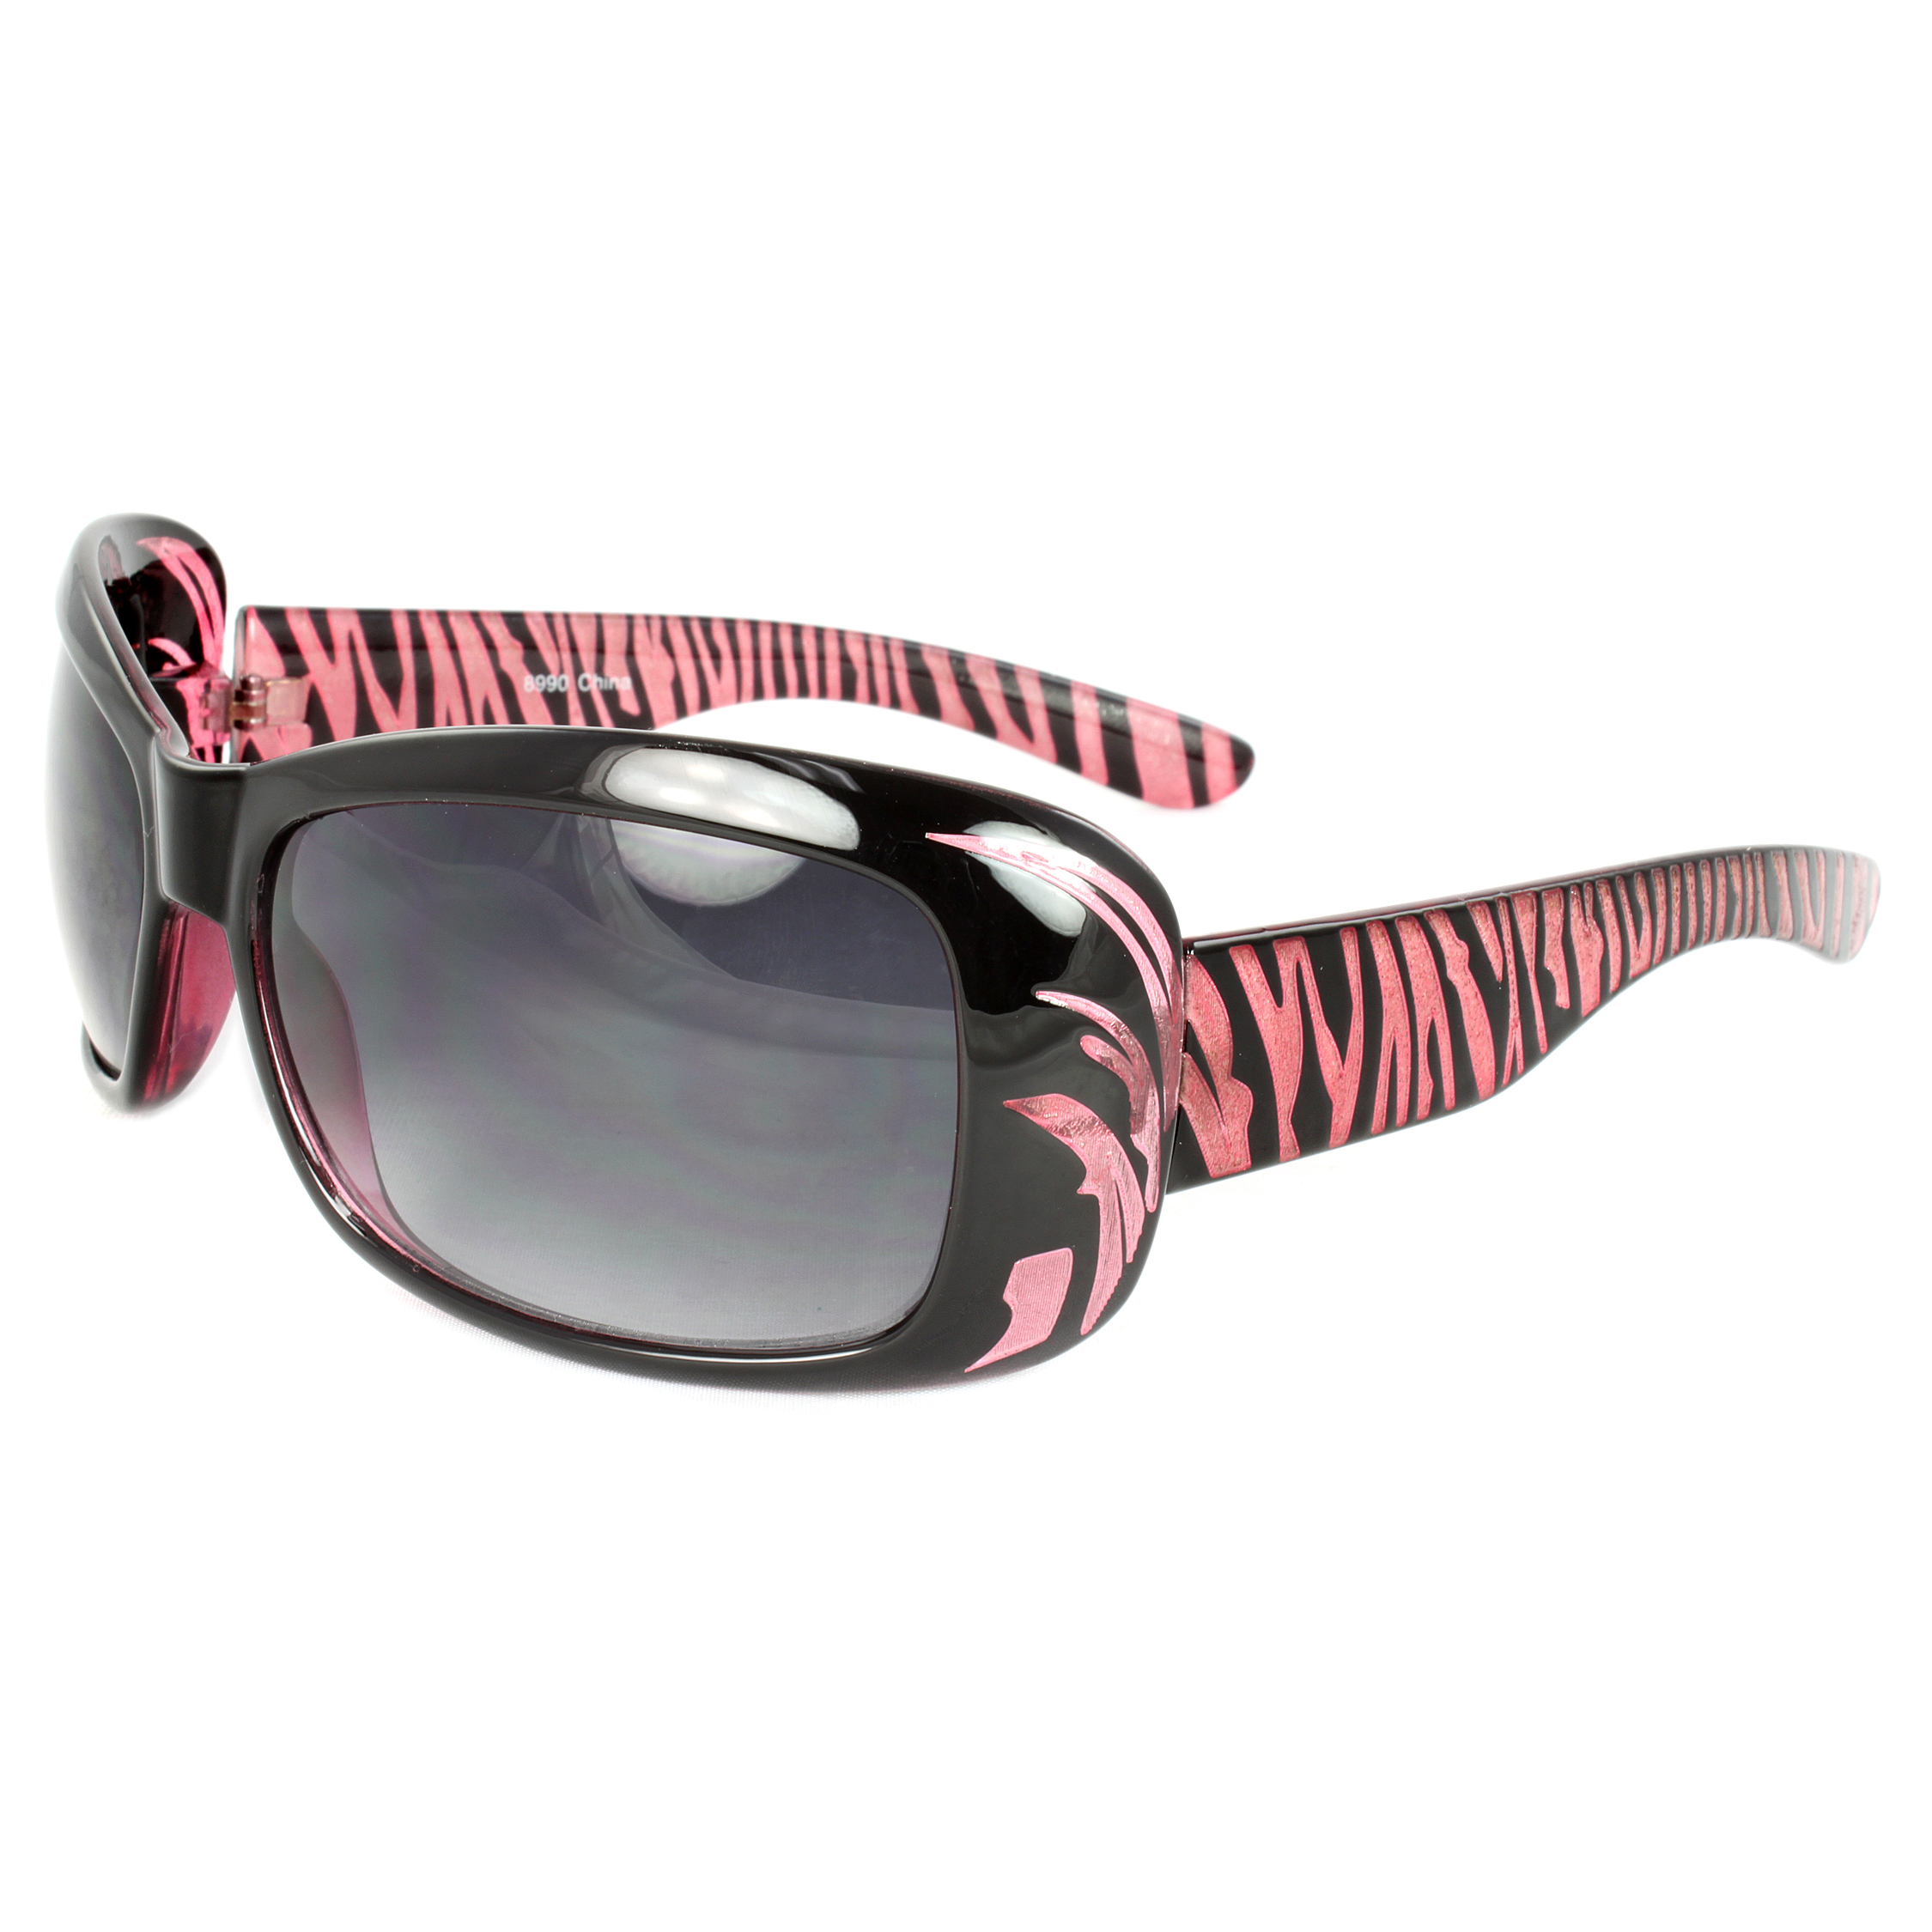 Stylish Shield Sunglasses Black Pink Frame Purple Black Lenses for Women and Men - image 1 of 2